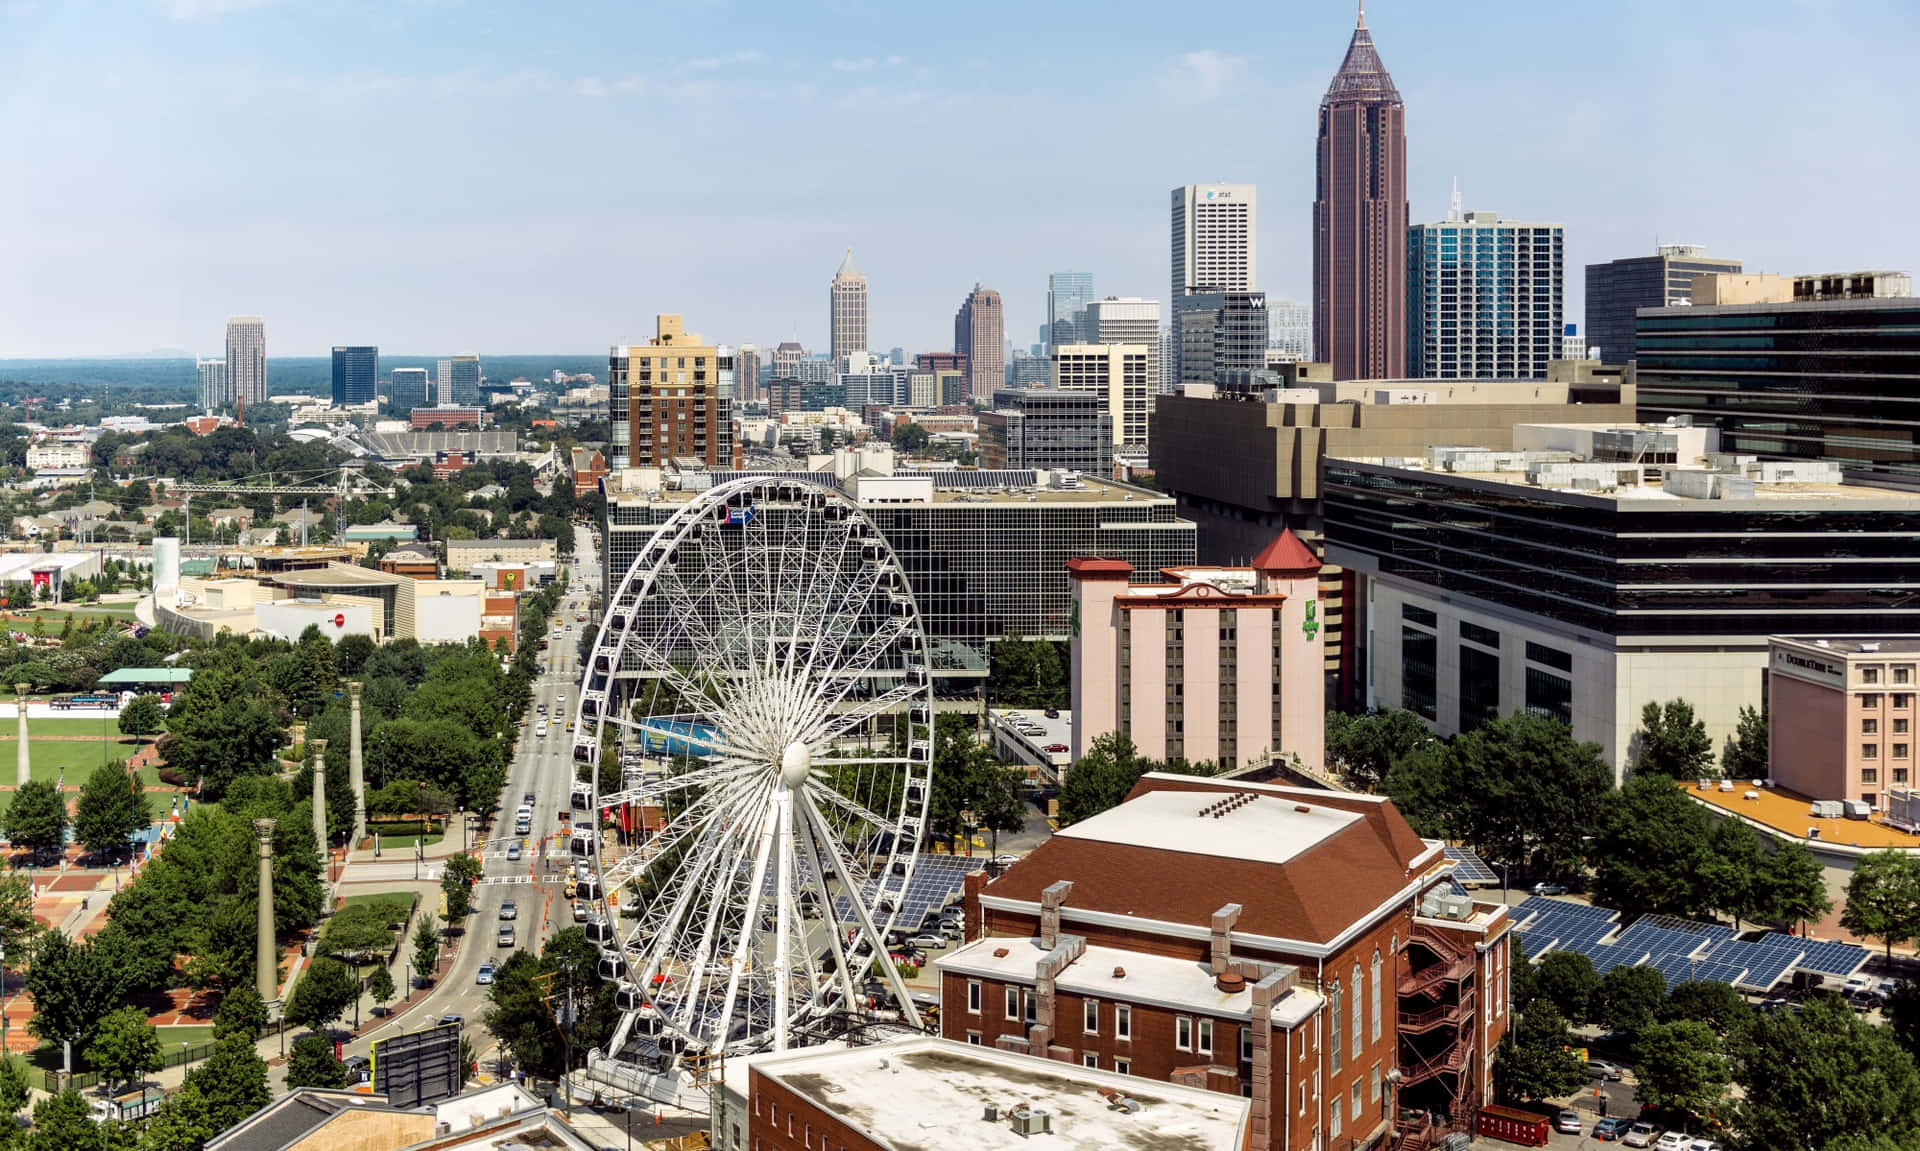 Atlanta City Center With Ferris Wheel And City Skyline